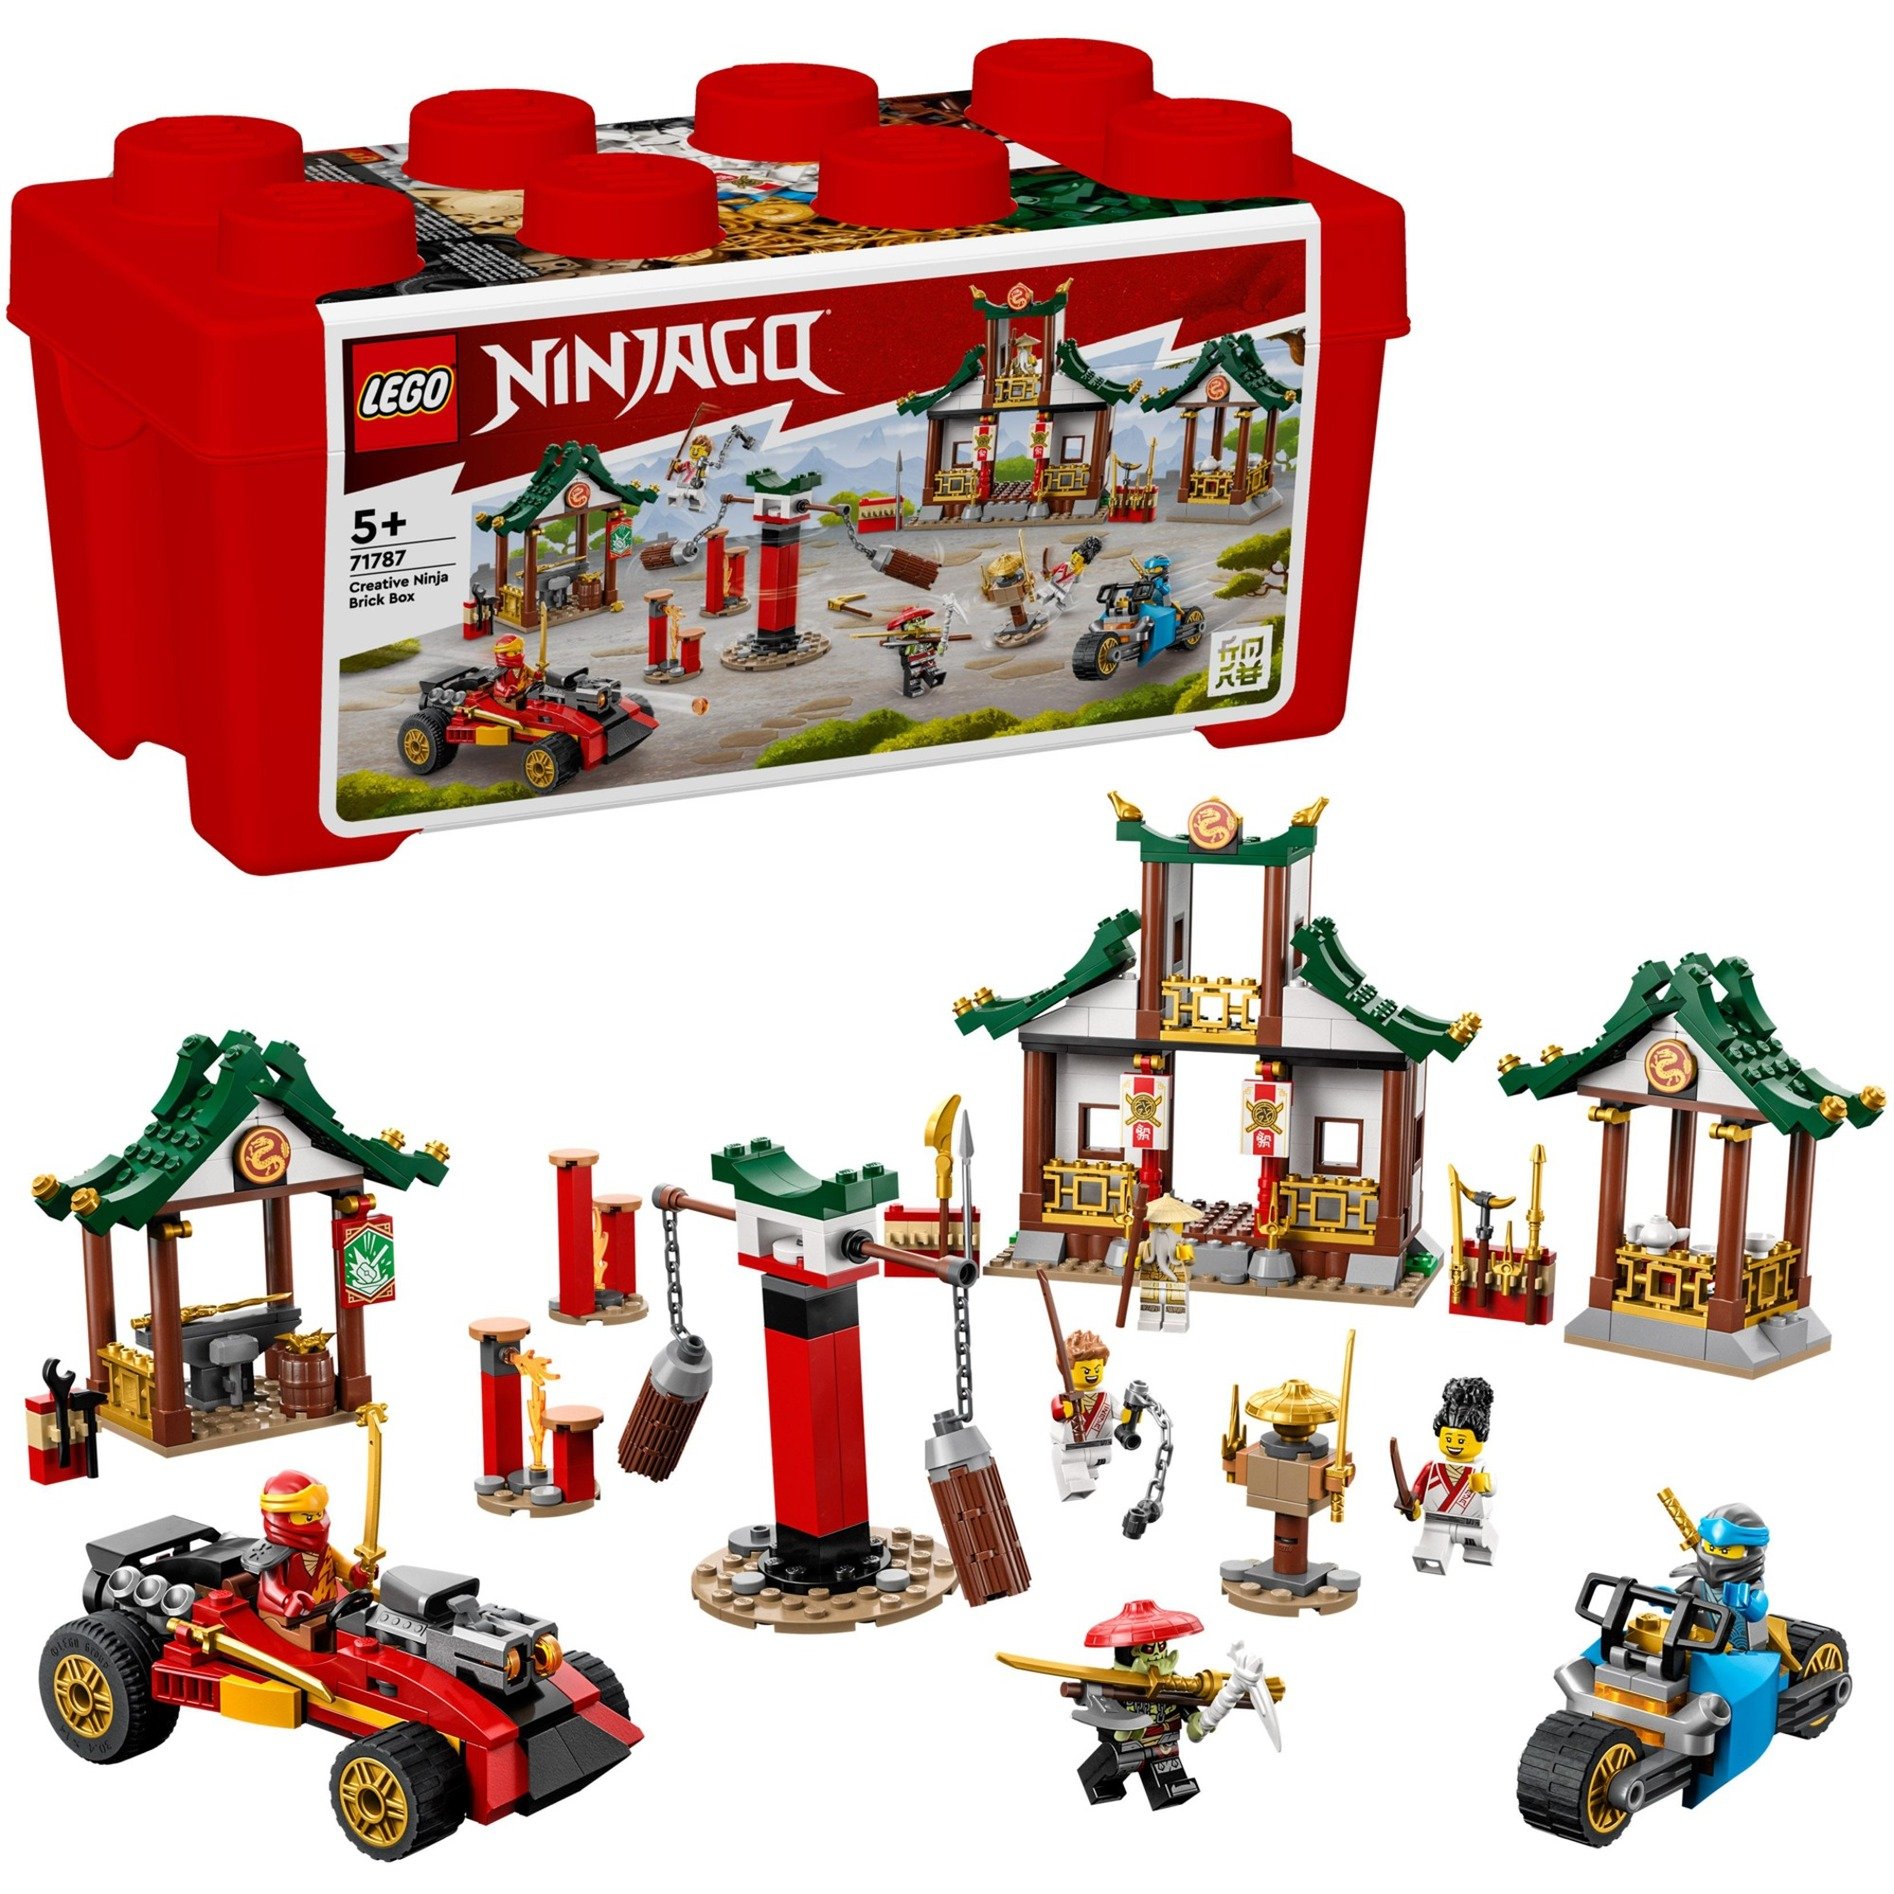 71787 Ninjago Kreative Ninja Steinebox, Konstruktionsspielzeug von Lego